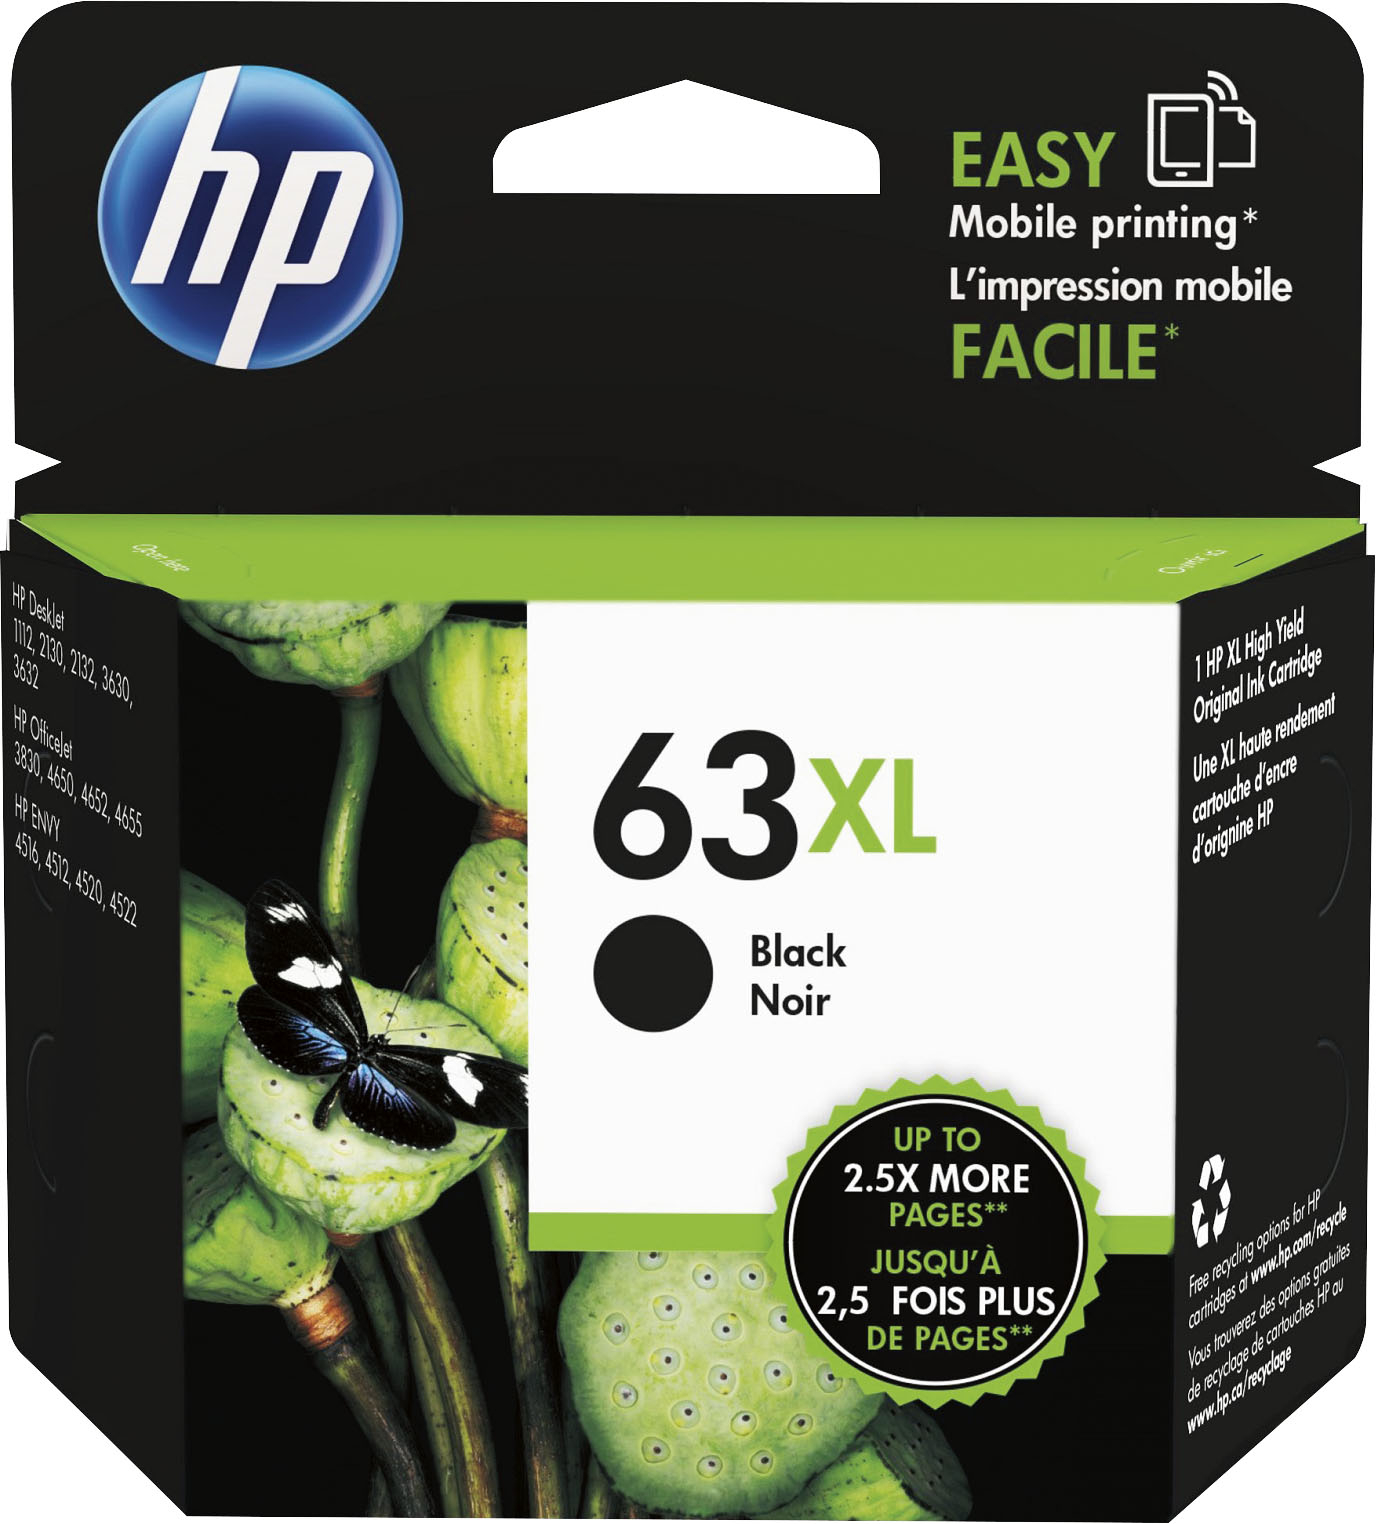 HP High-Yield Ink Cartridge Black F6U64AN#140 - Best Buy